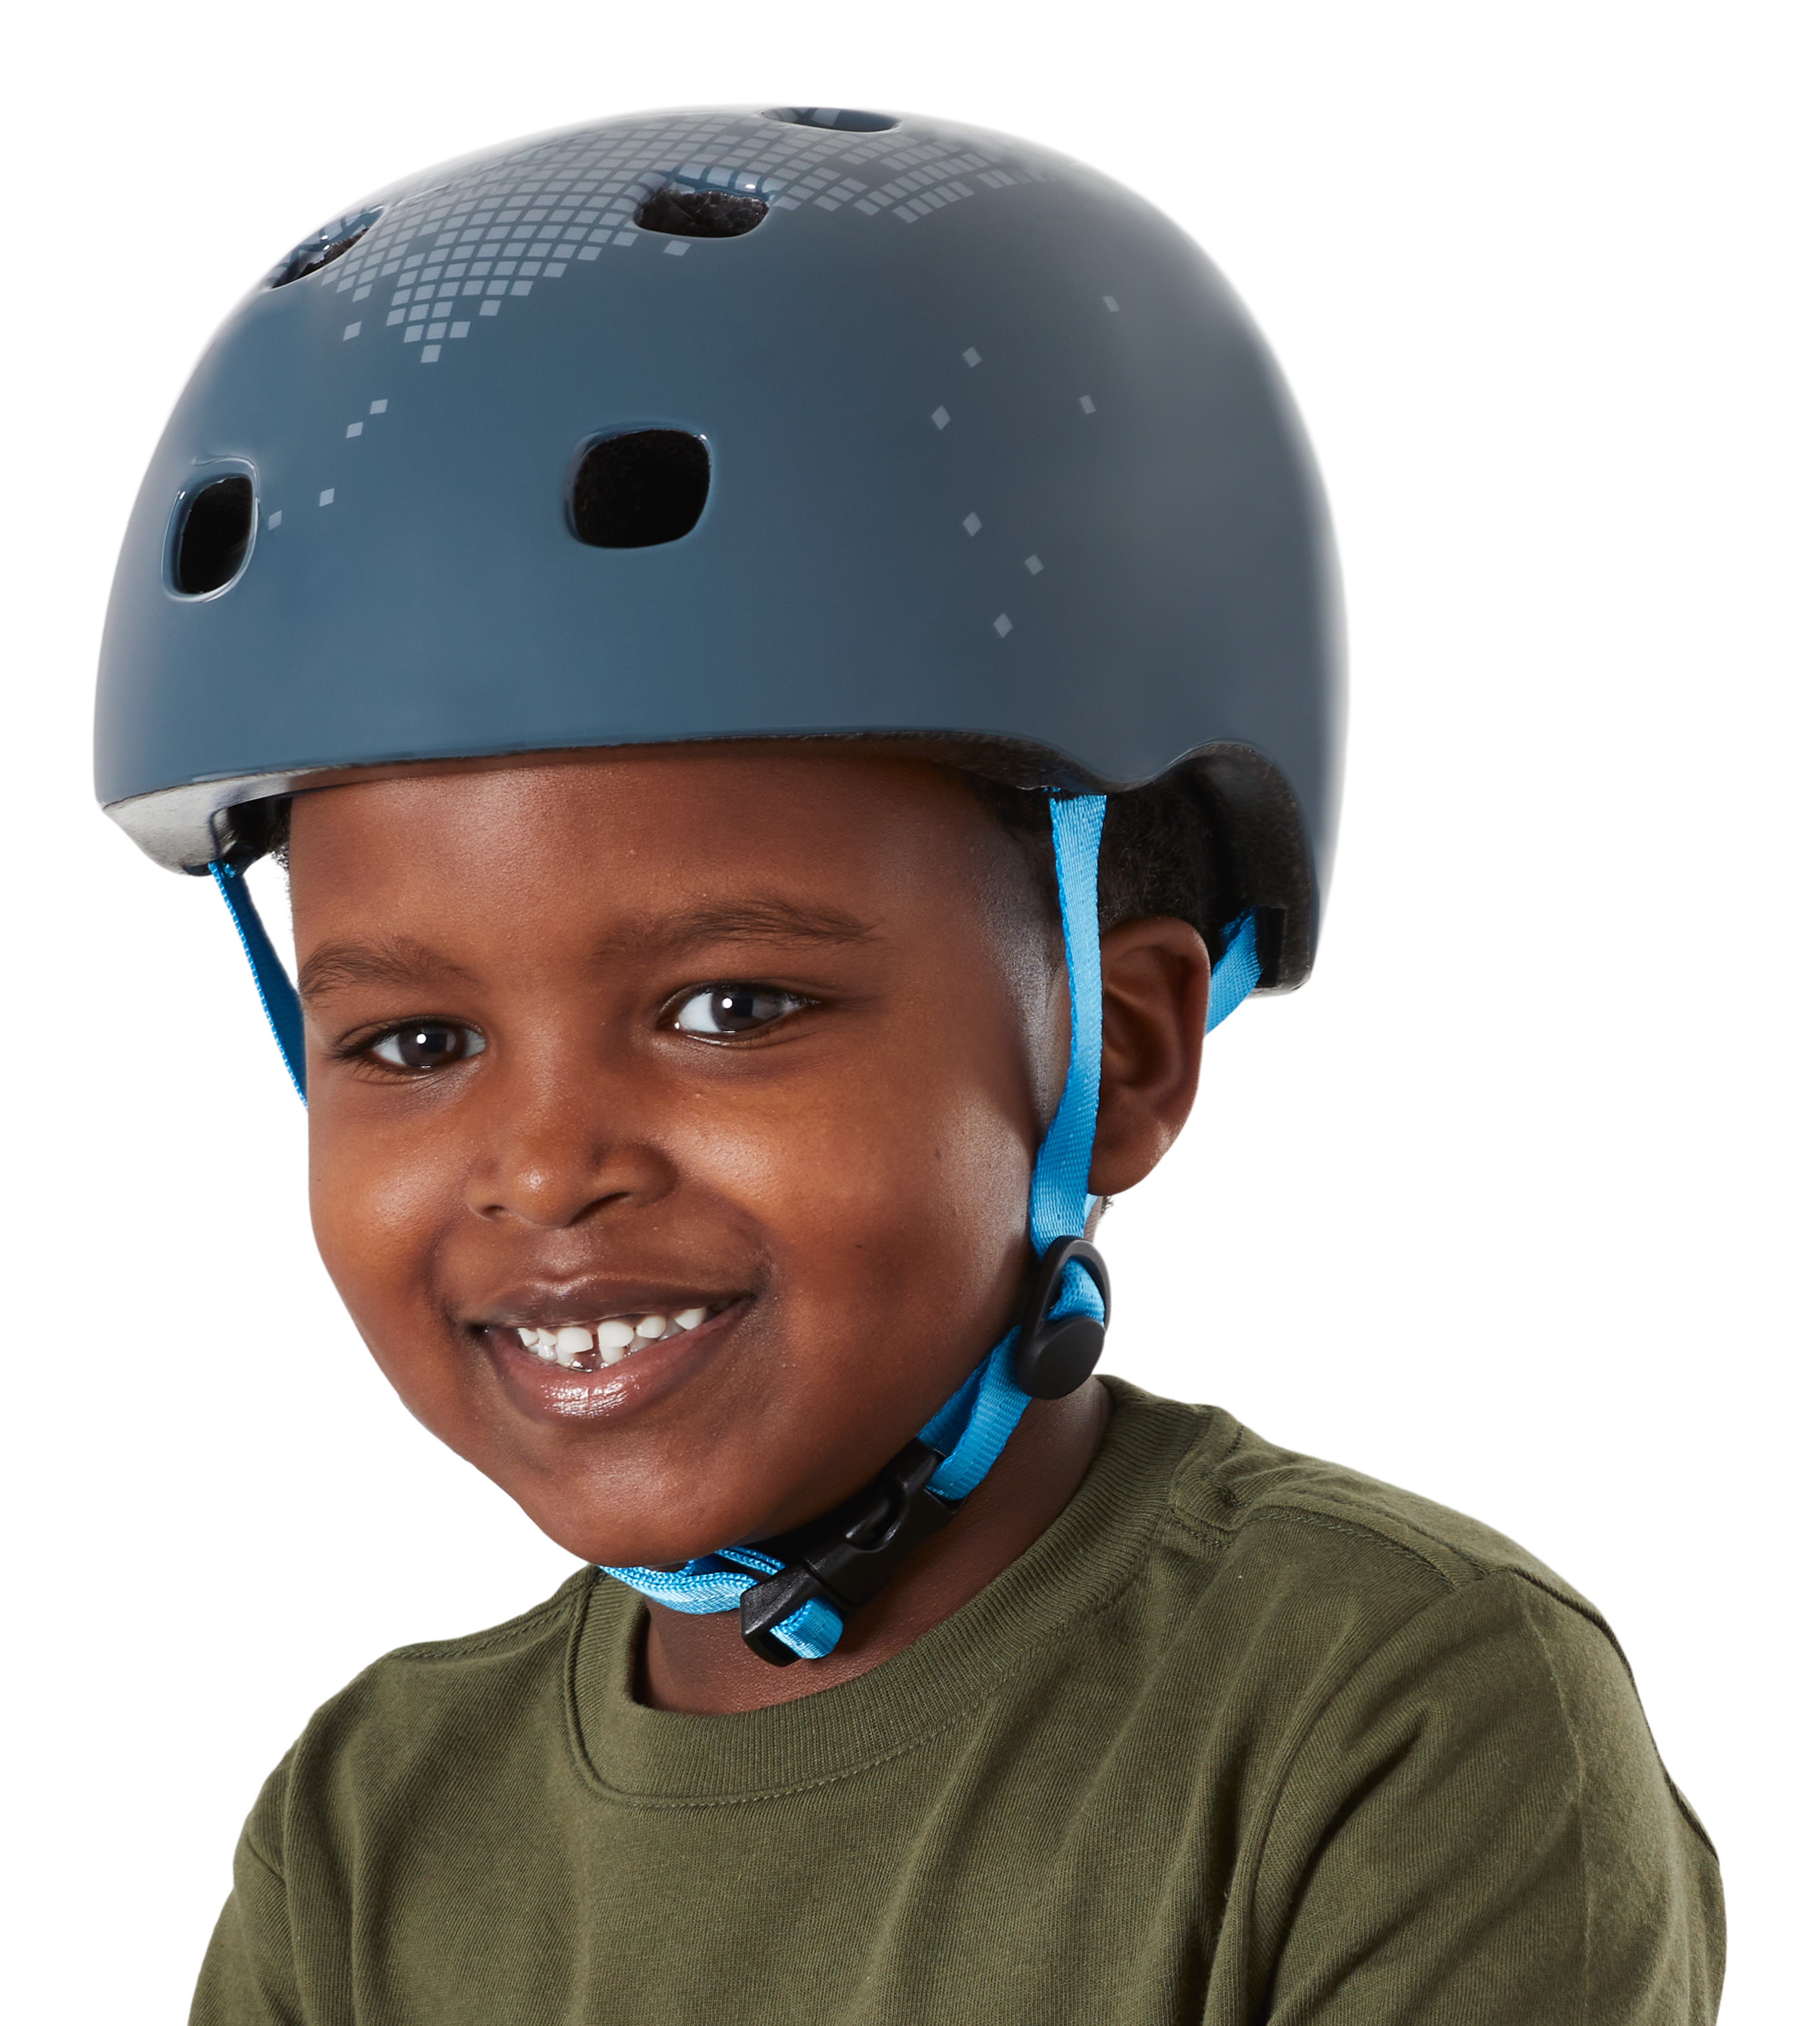 Schwinn Burst Youth Multisport Helmet, Grey - image 3 of 8